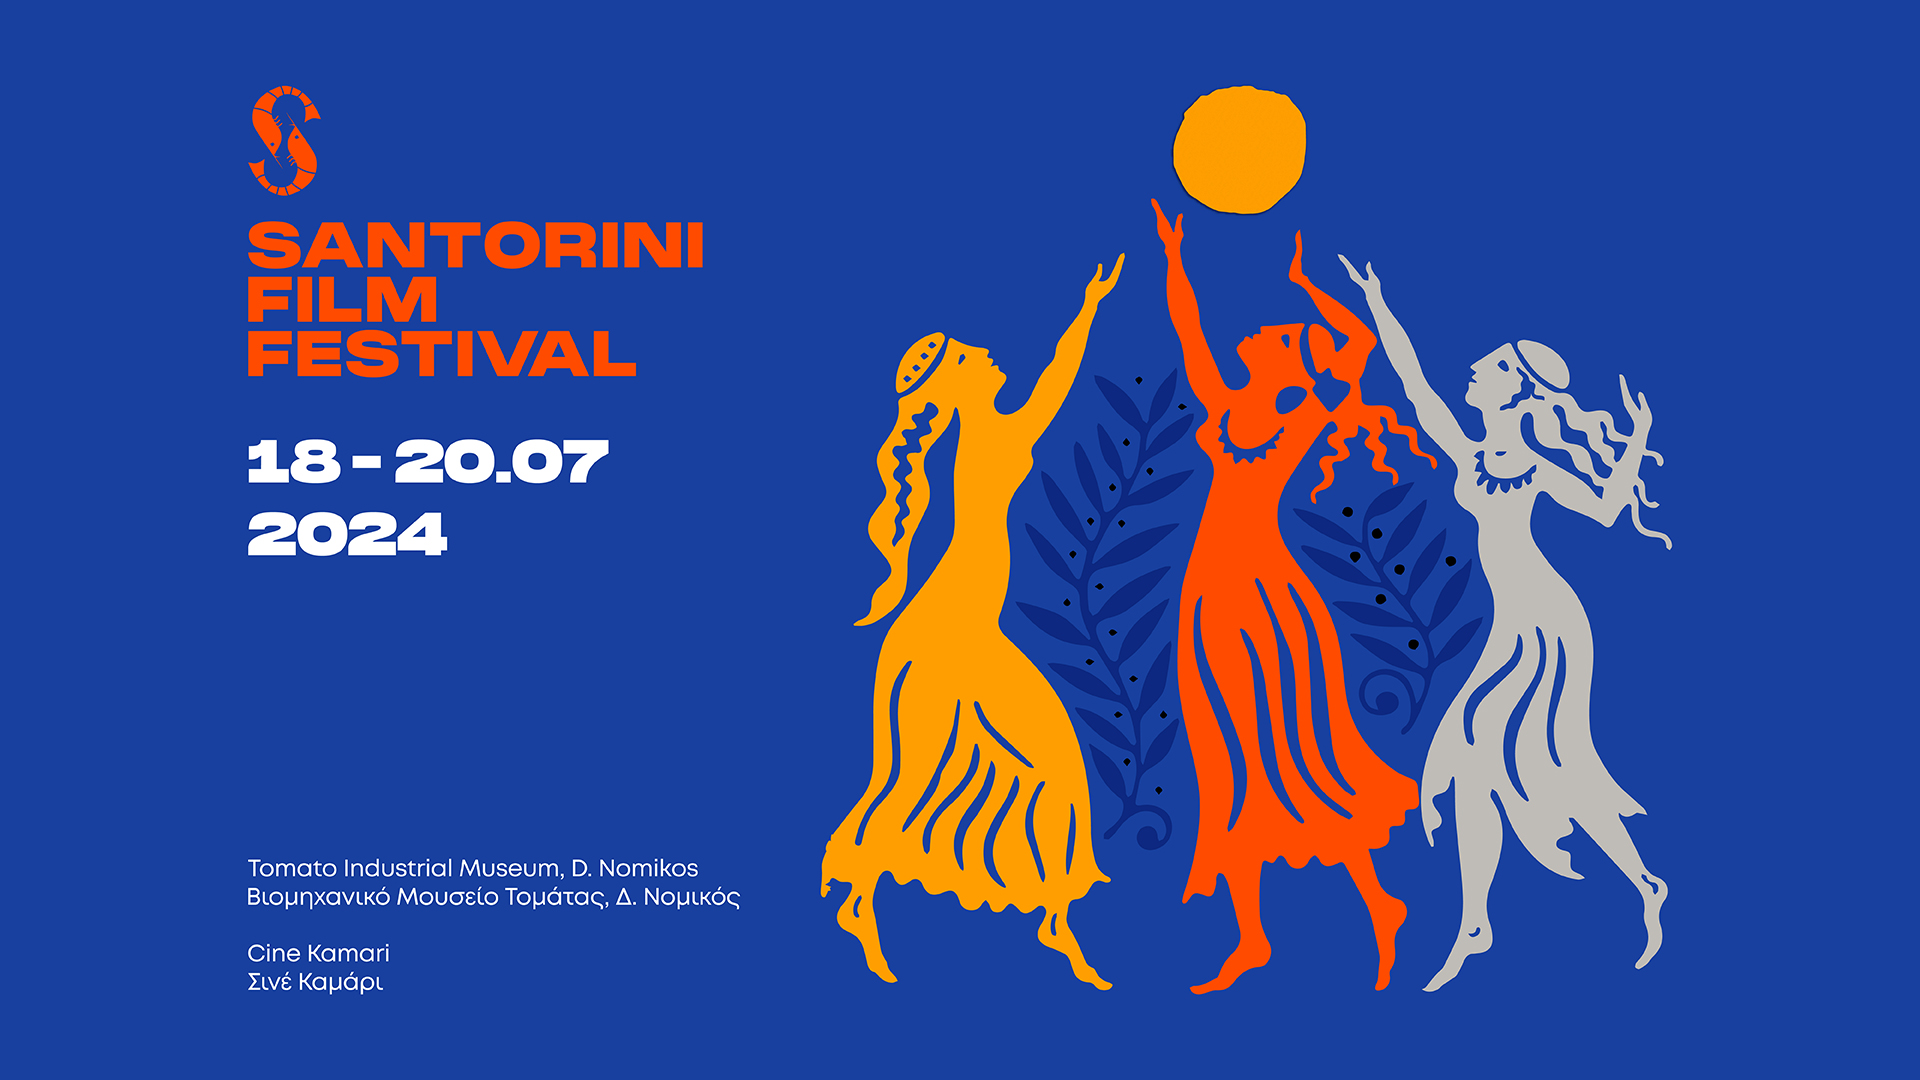 Santorini Film Festival